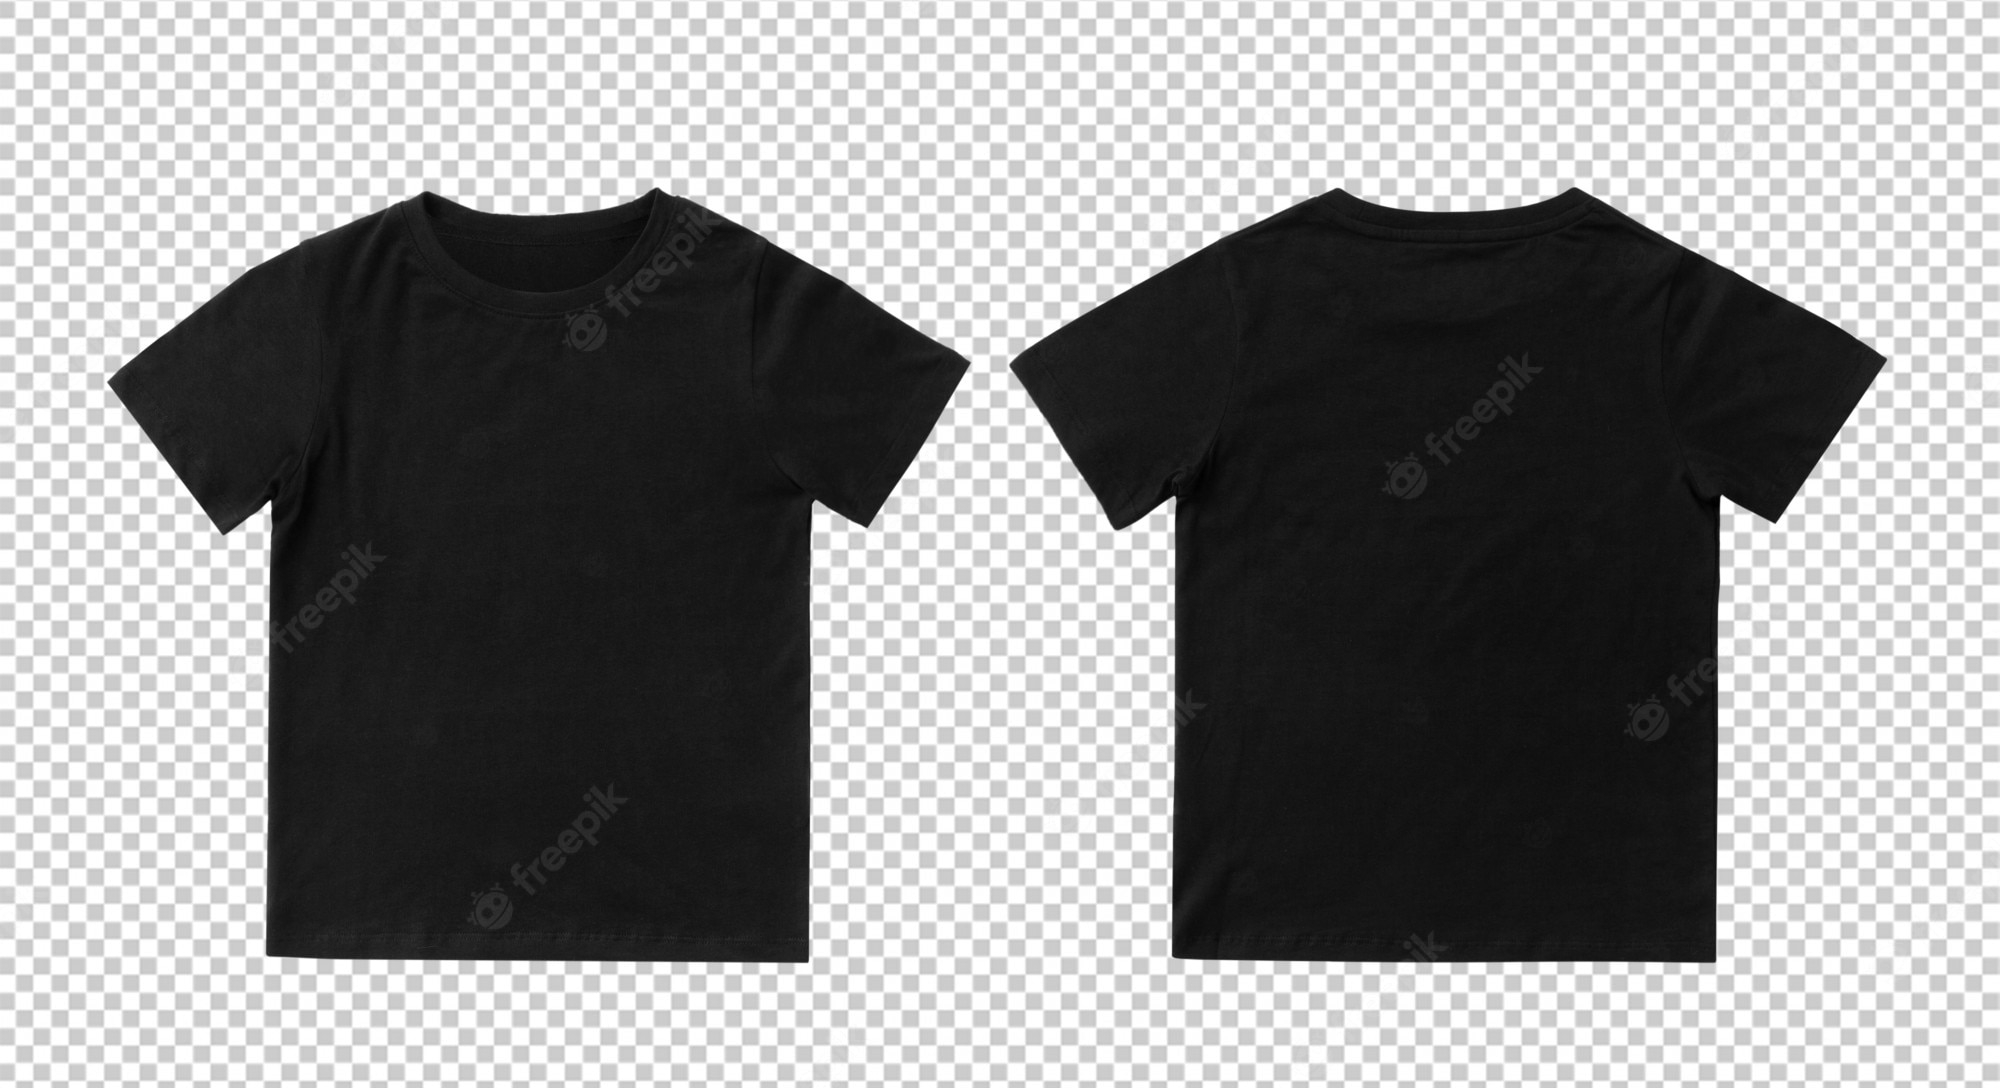 Blank Black Kids T Shirt Mock Up Template  PSD Download Pertaining To Blank T Shirt Design Template Psd